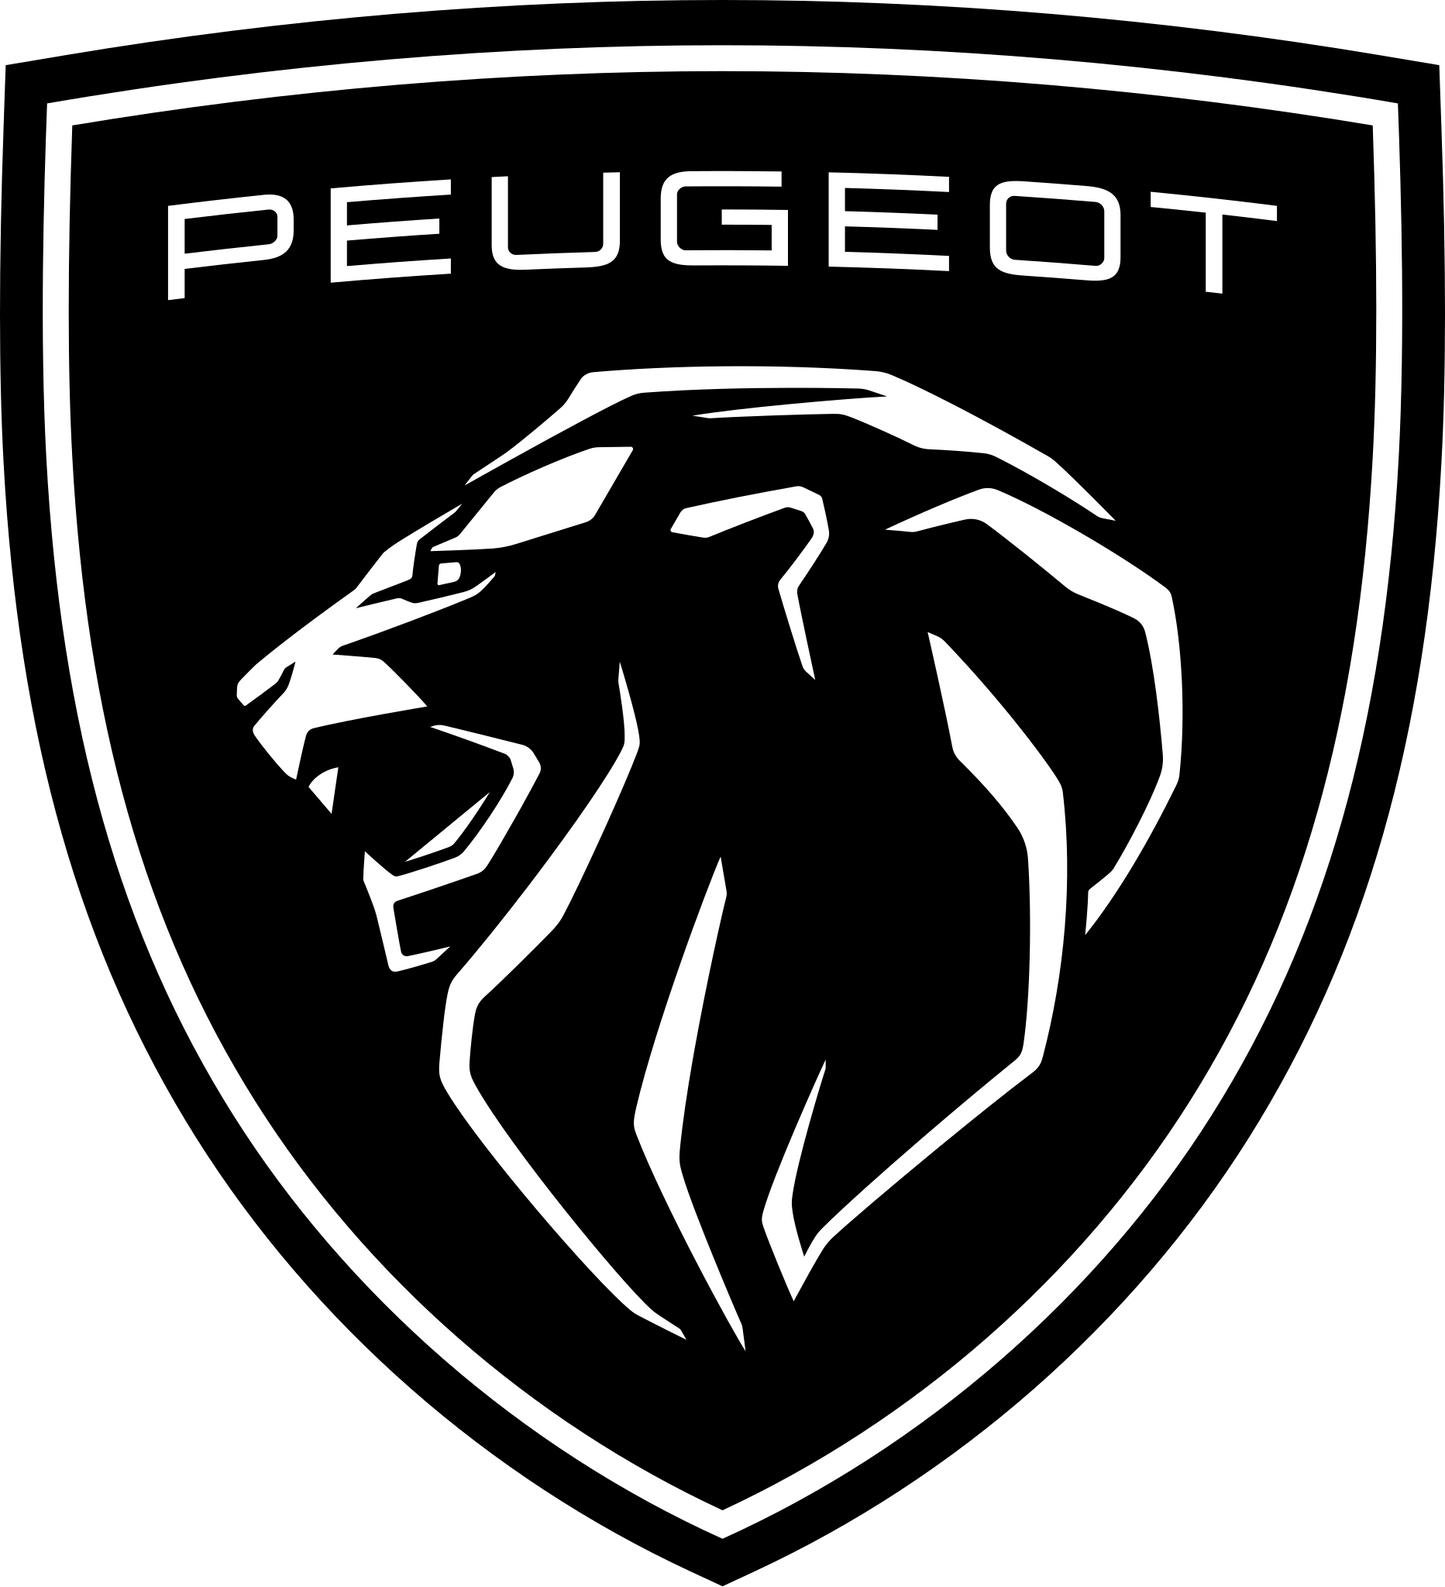 Codice autoradio Peugeot